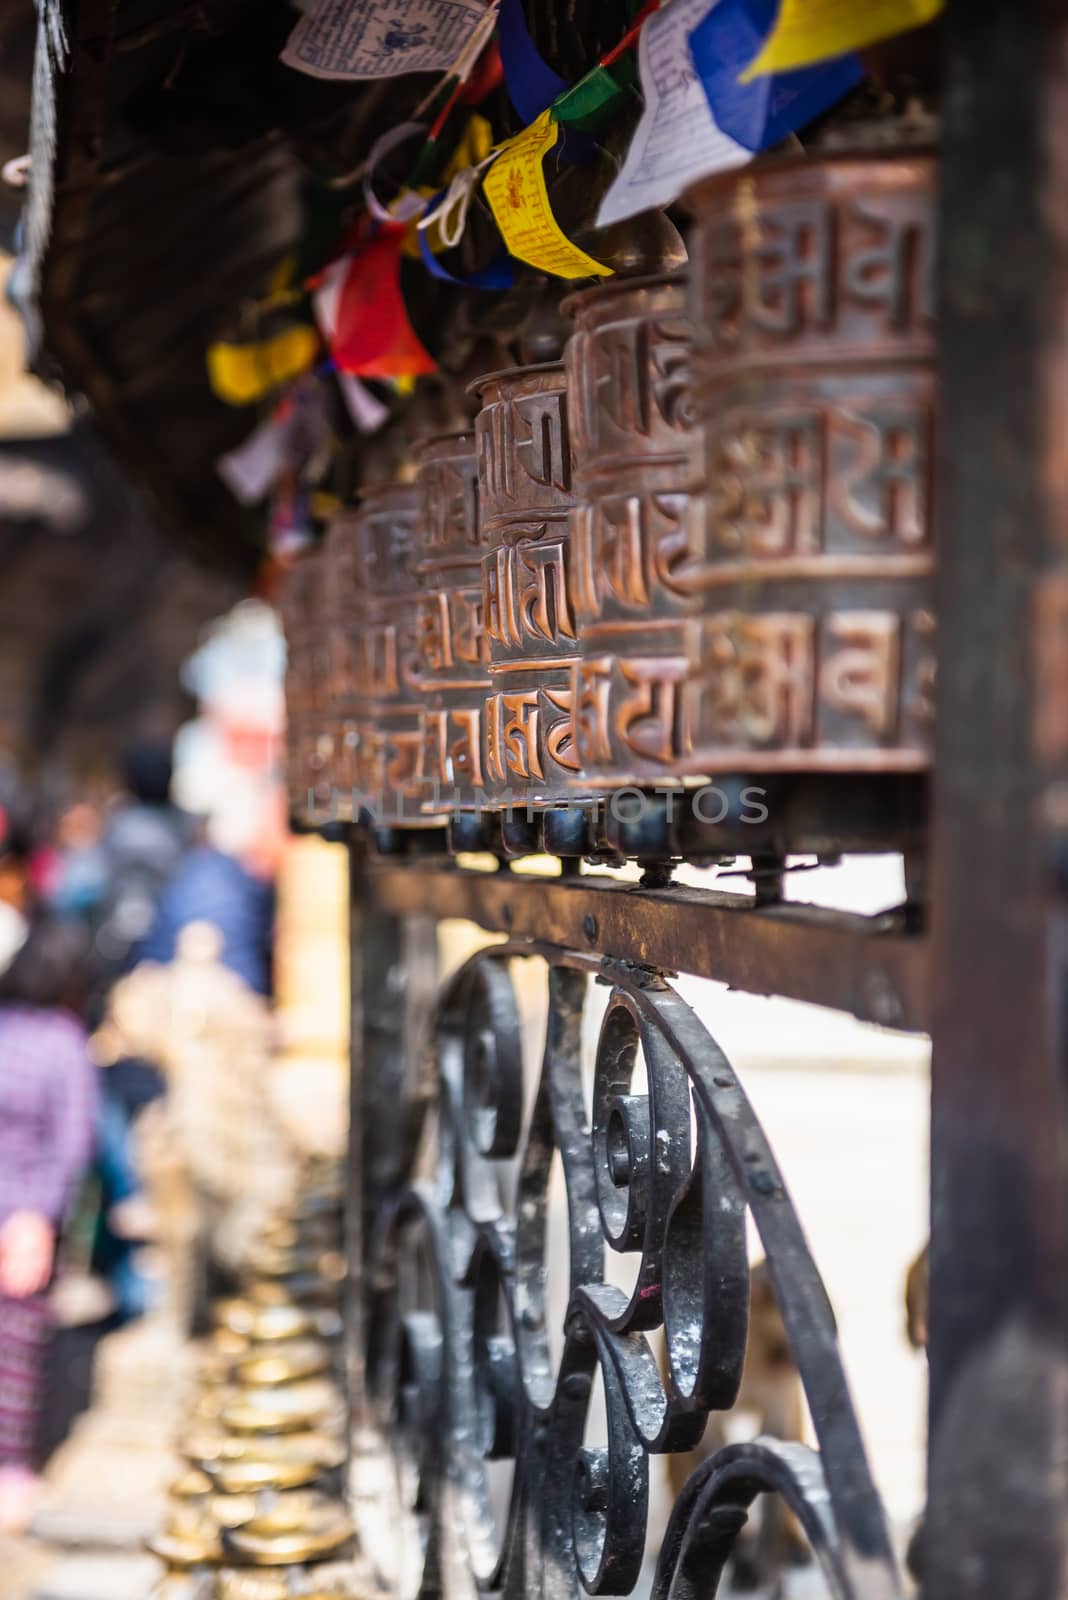 Prayer wheels at Boudhanath Stupa in Kathmandu, Nepal by rayints